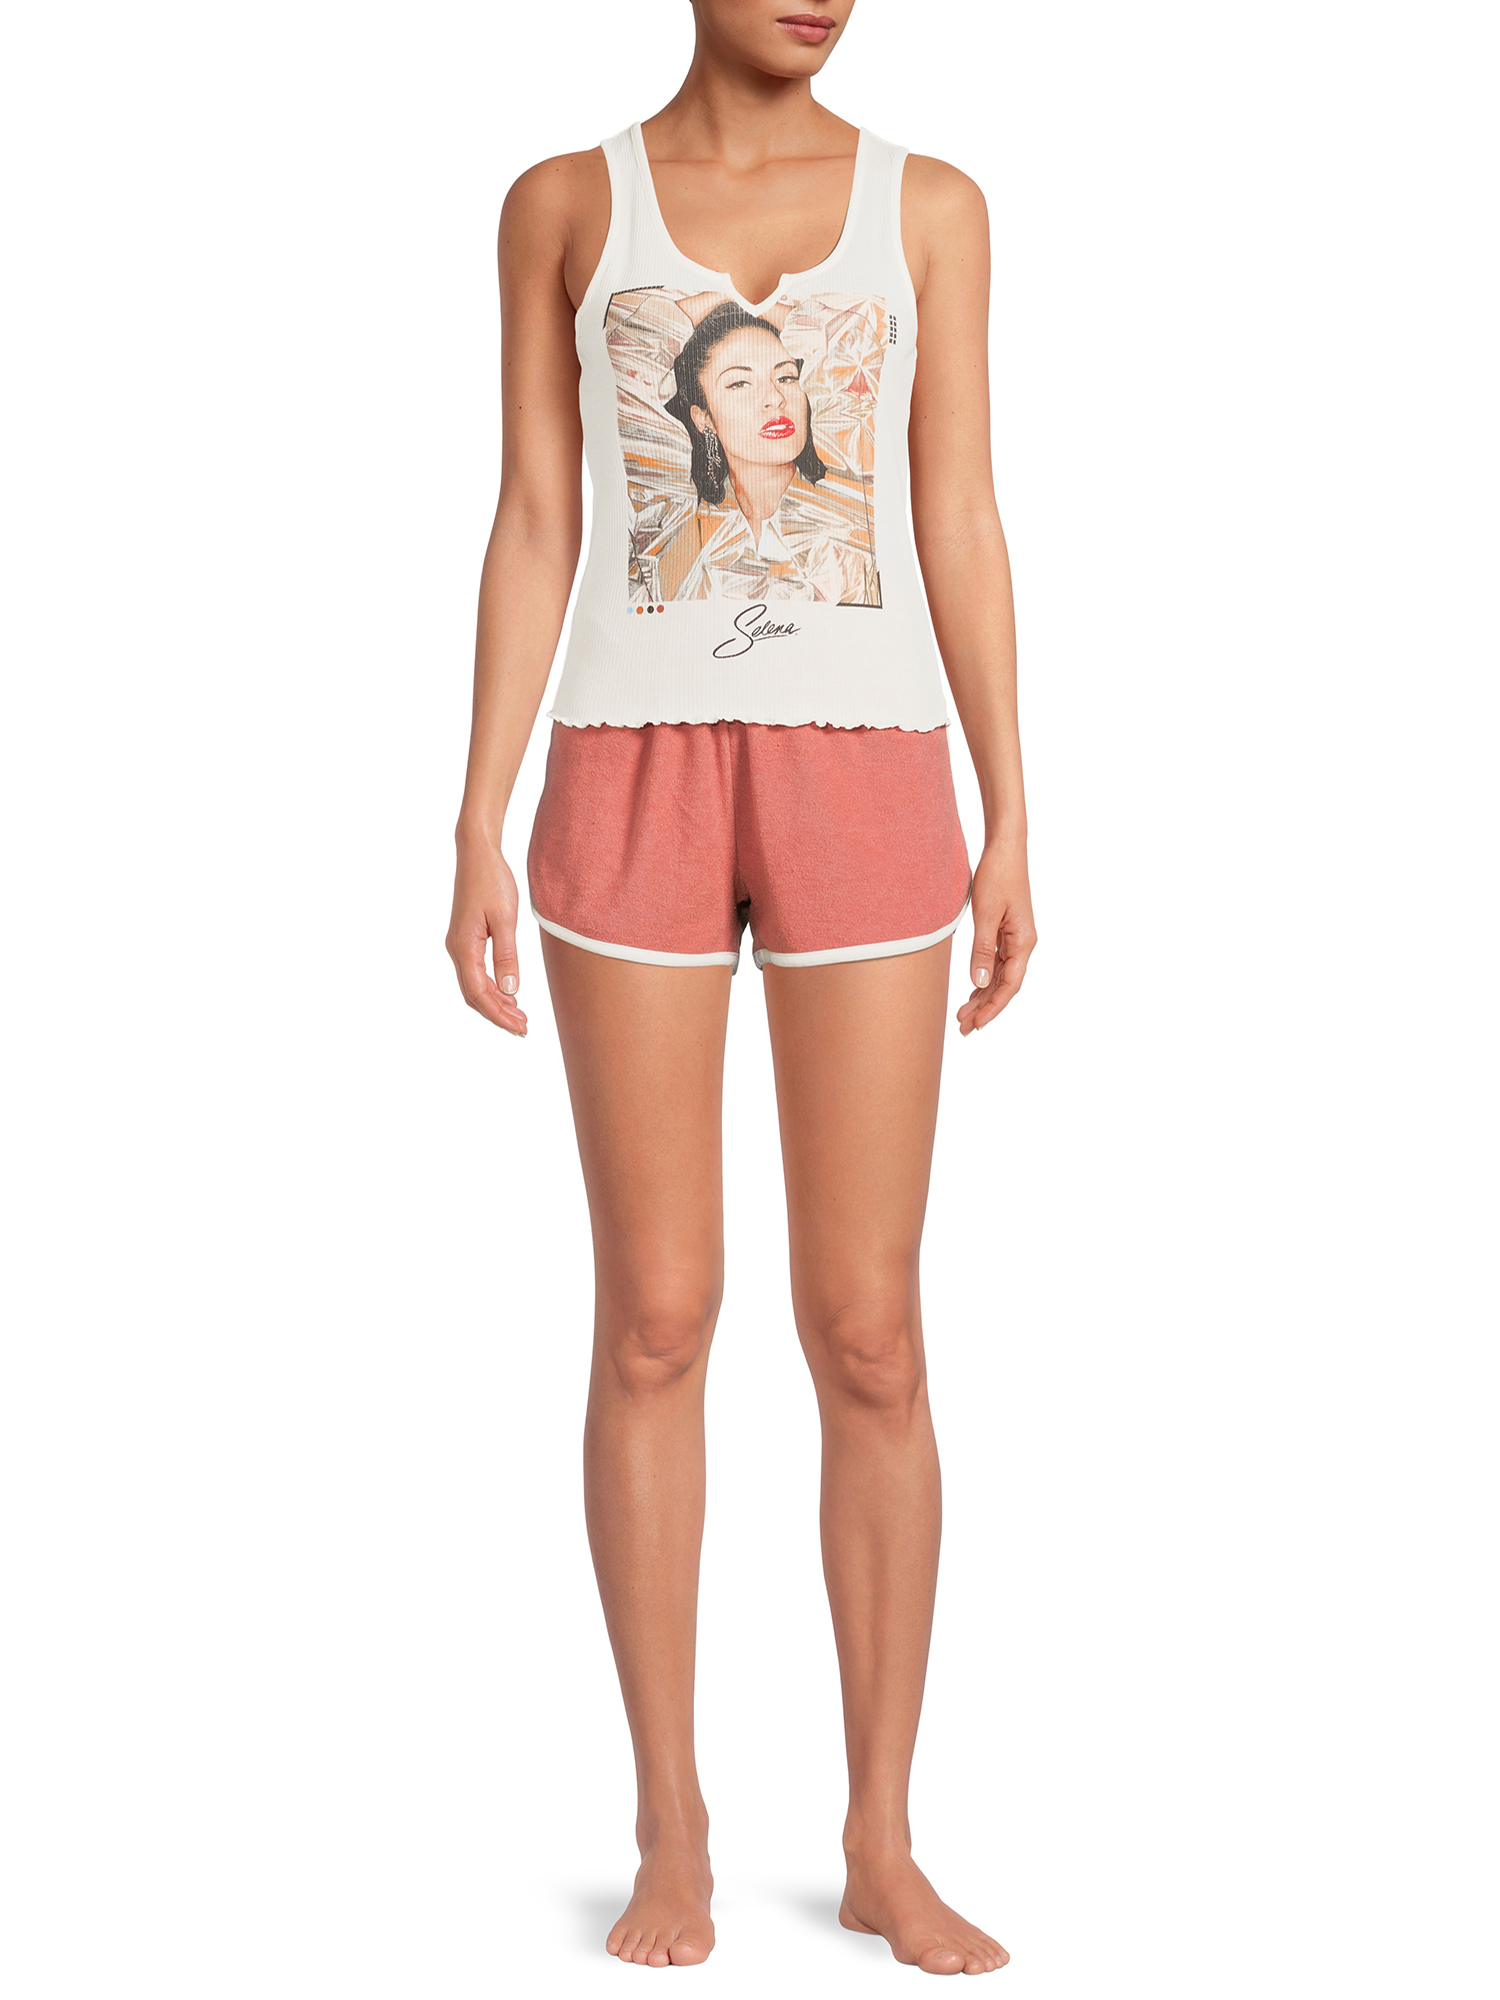 Selena Women's Ribbed Tank Top and Shorts Sleep Set, 2-Piece - image 2 of 5